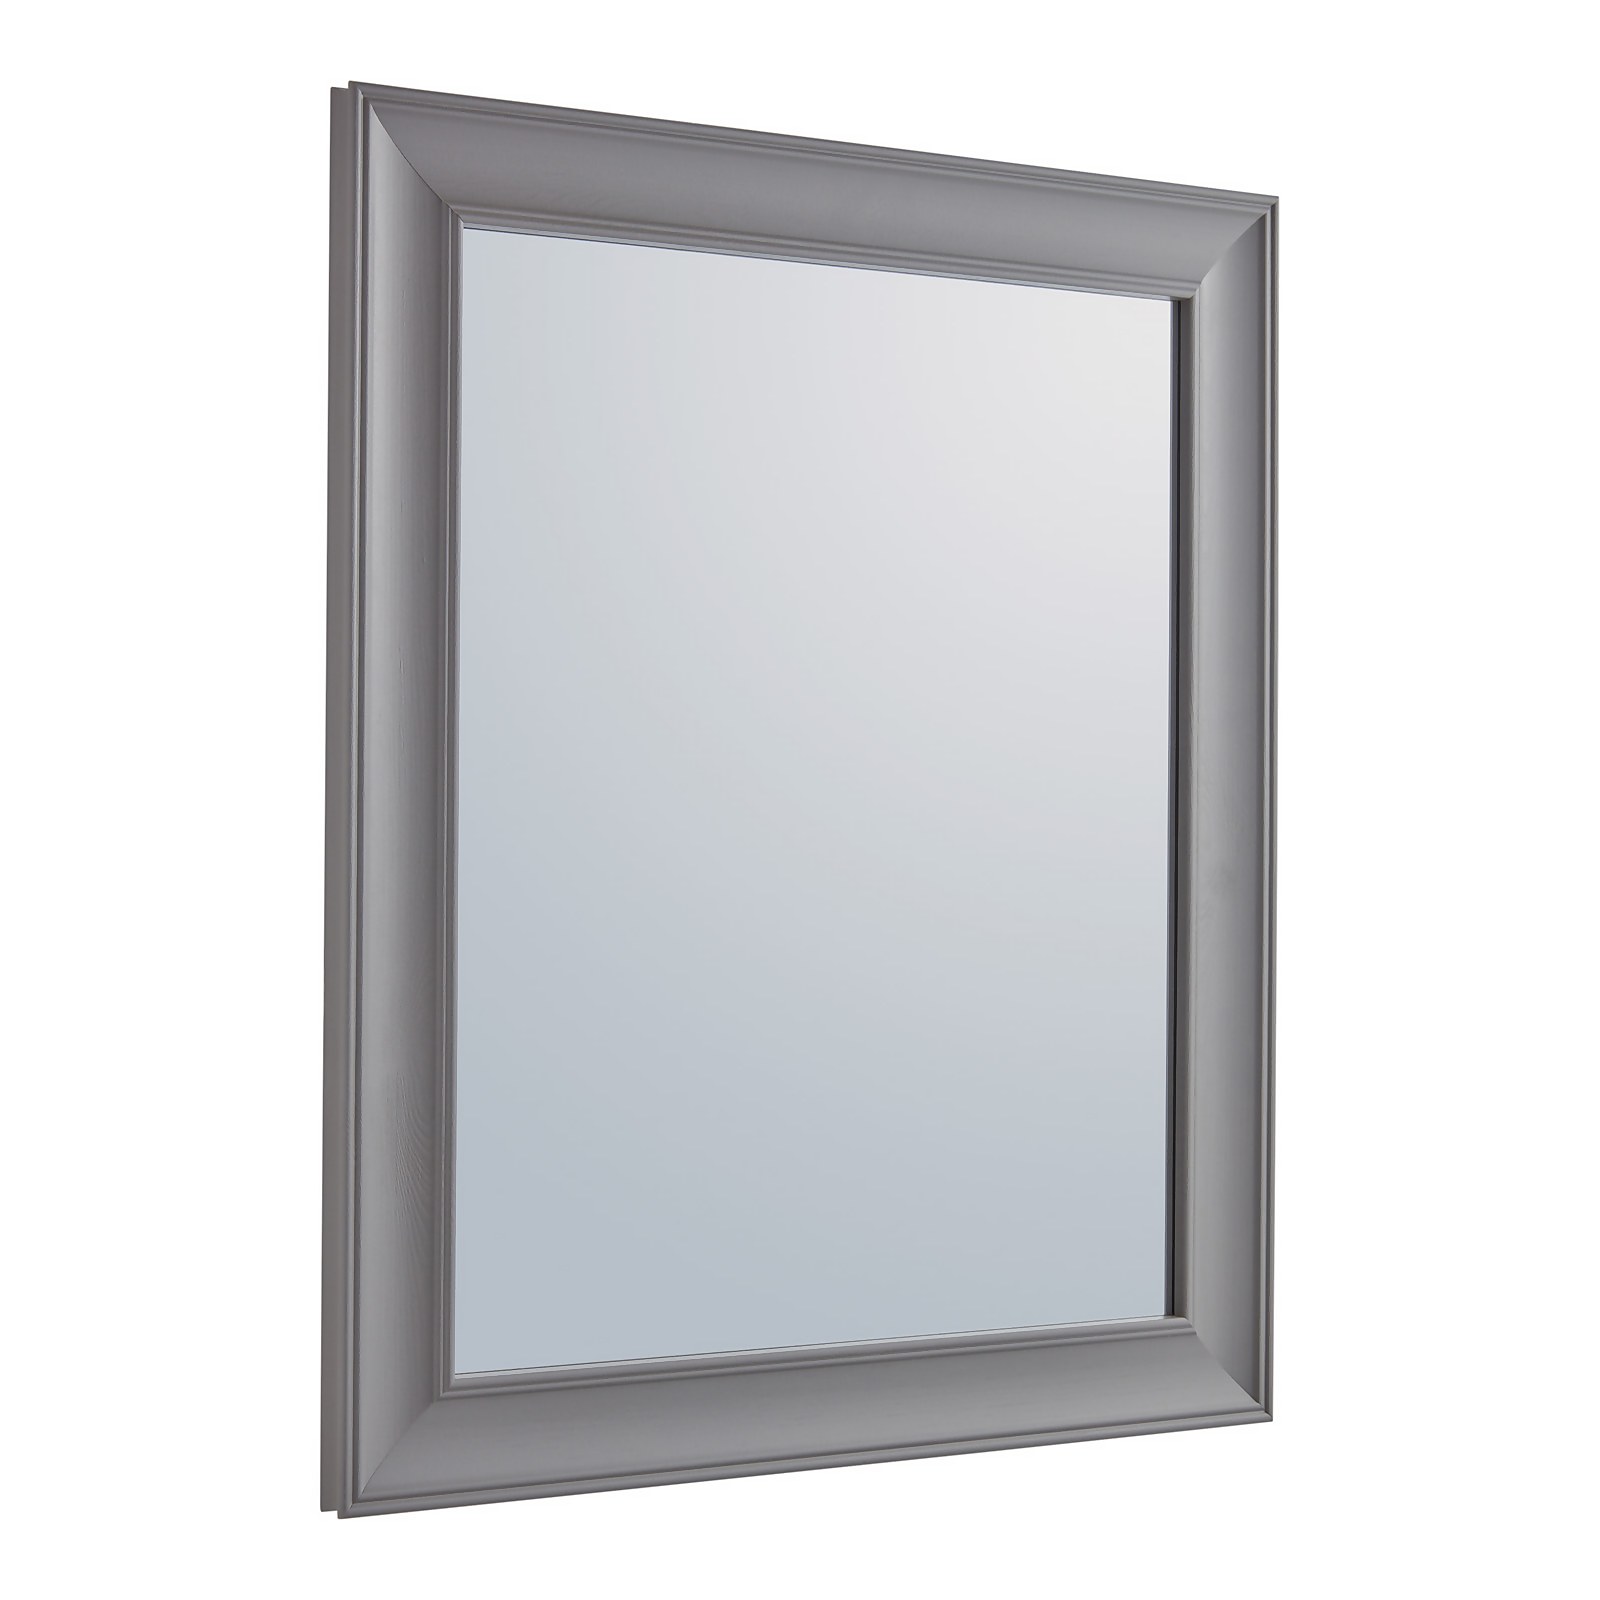 Photo of Coldrake Framed Mirror - Vapour Grey - 51x61cm